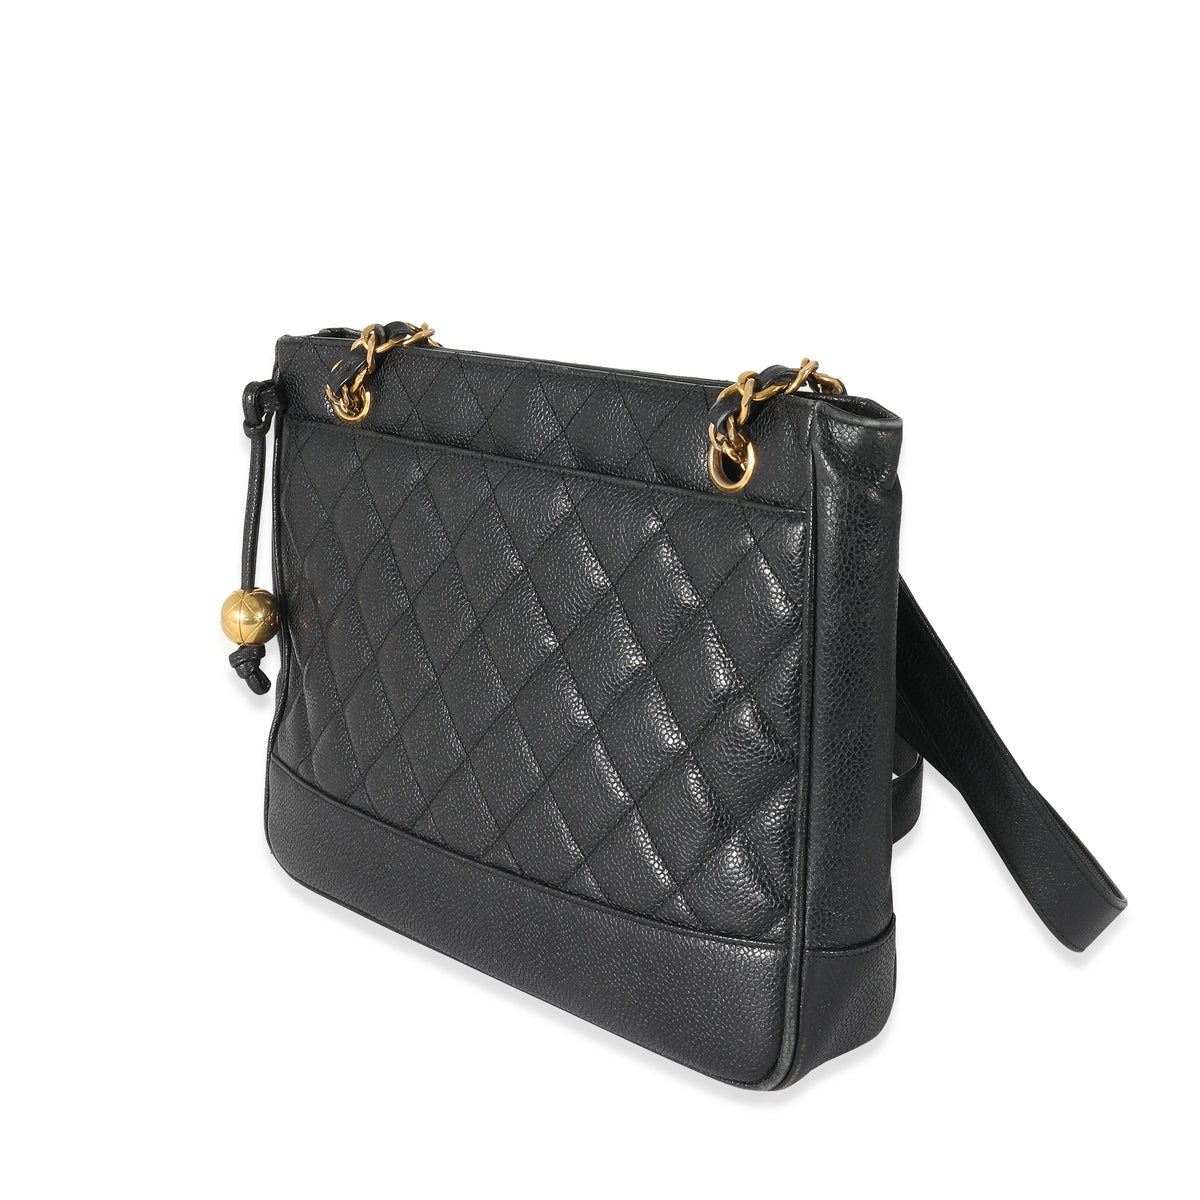 Chanel Jumbo Flap Shoulder Bag Black Patent Leather Auction